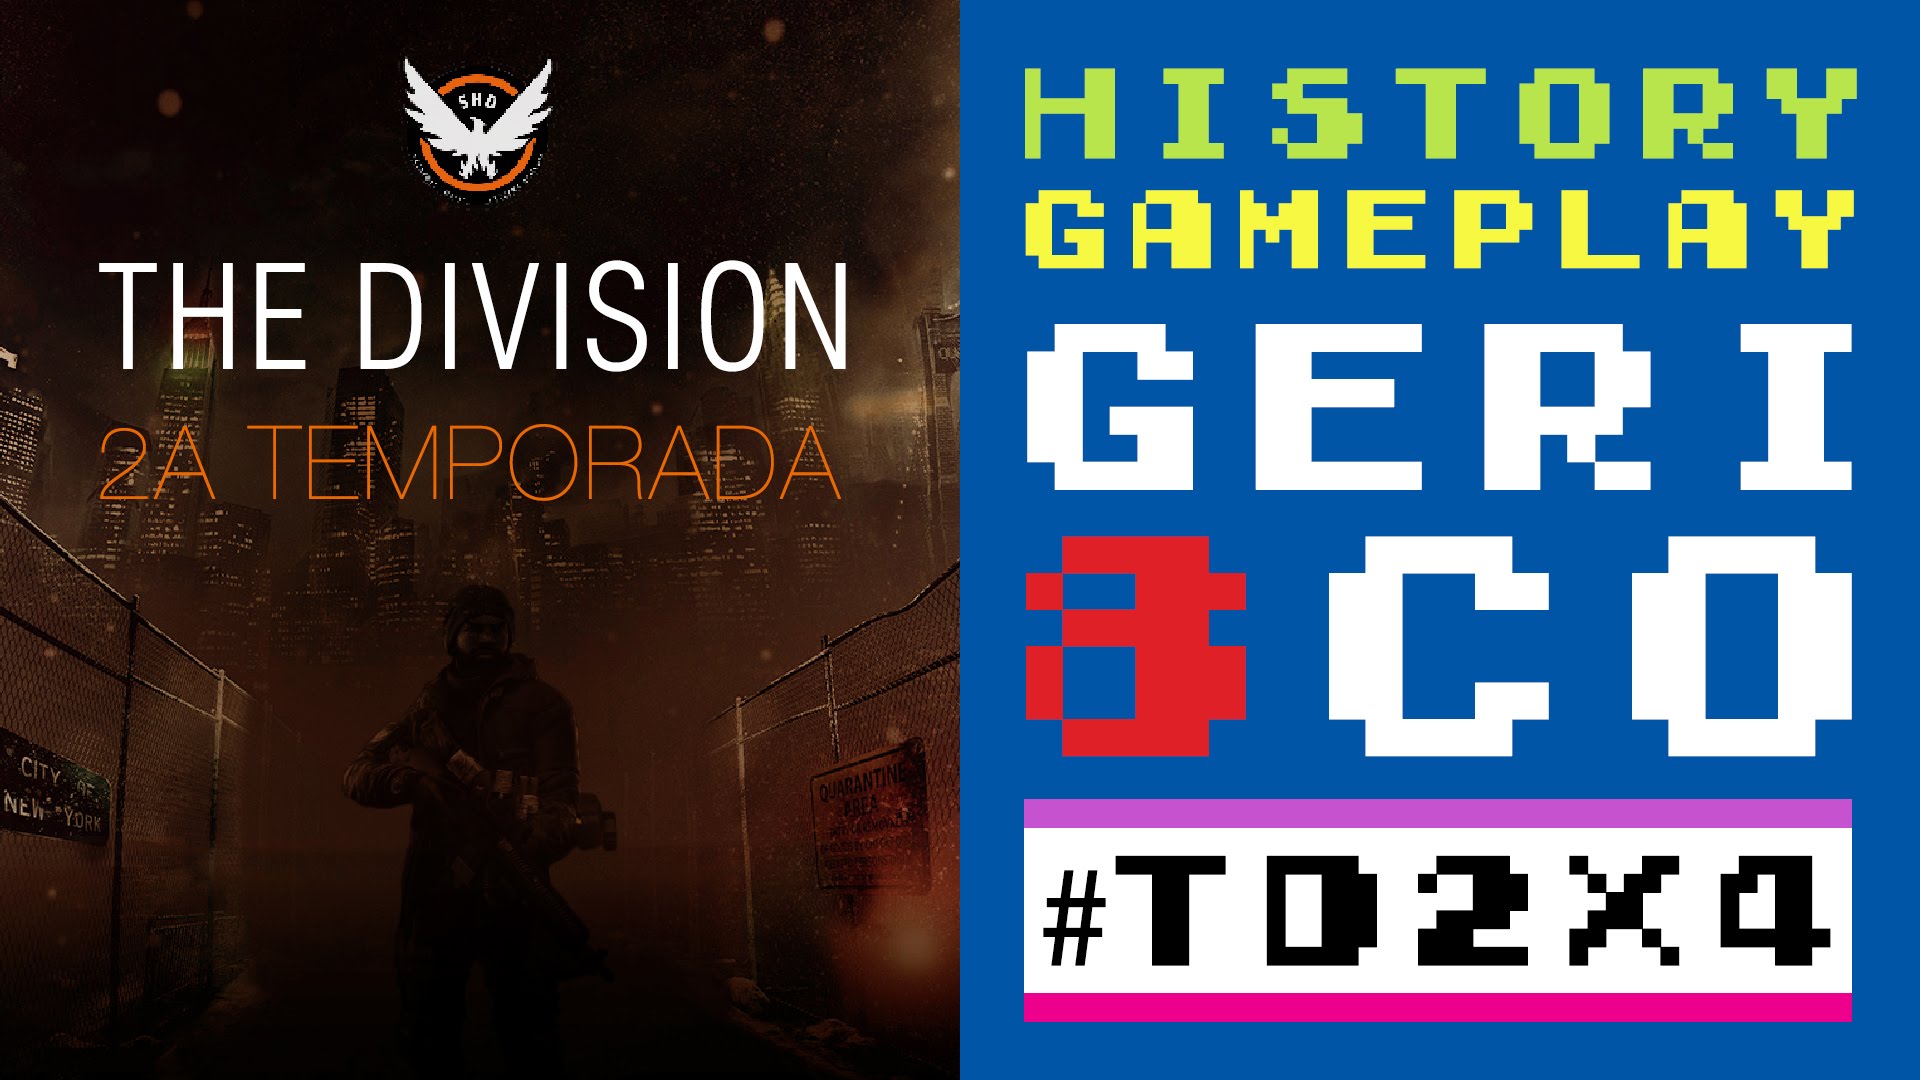 THE DIVISION 2A TEMPORADA (HISTORY GAMEPLAY) #TD2X4 de GERI8CO